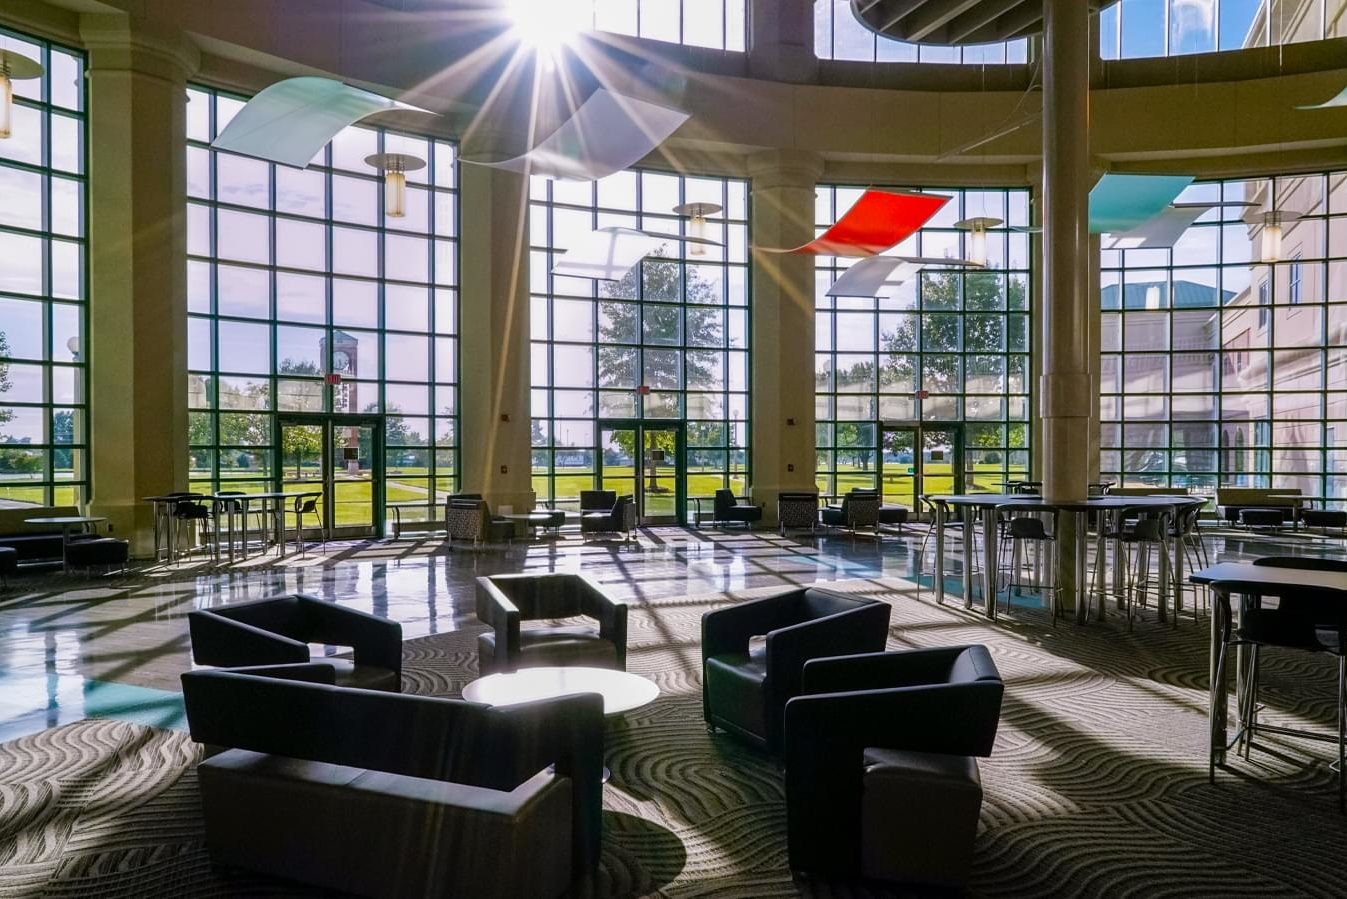 Shelton State Atrium with bright windows and dark chairs